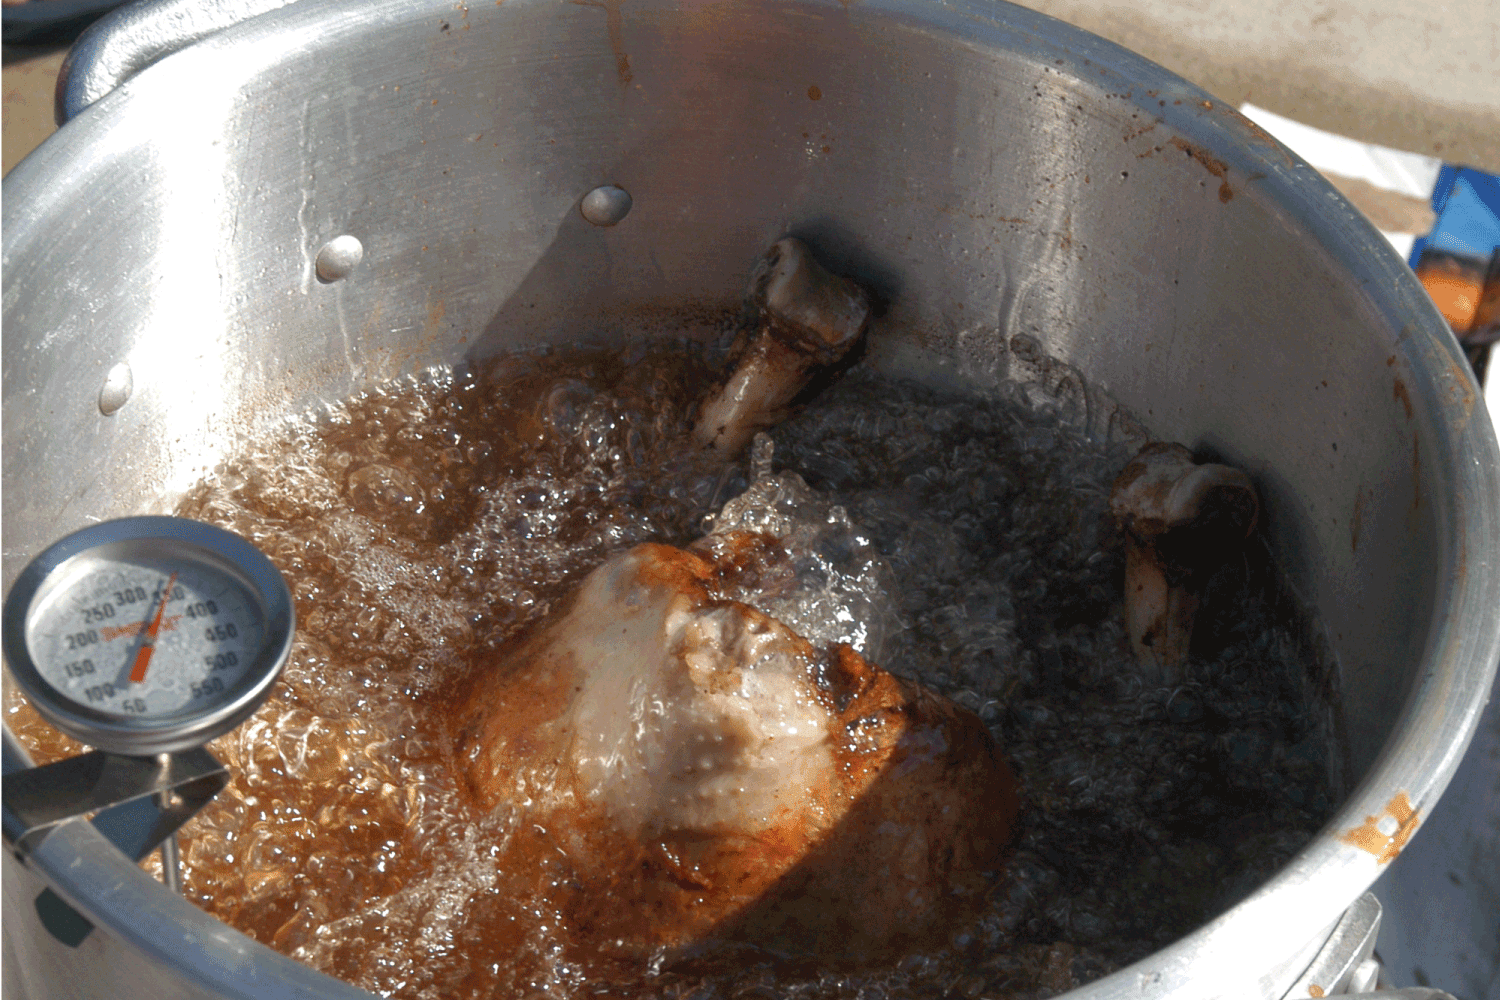 A full-size turkey being fried in peanut oil.